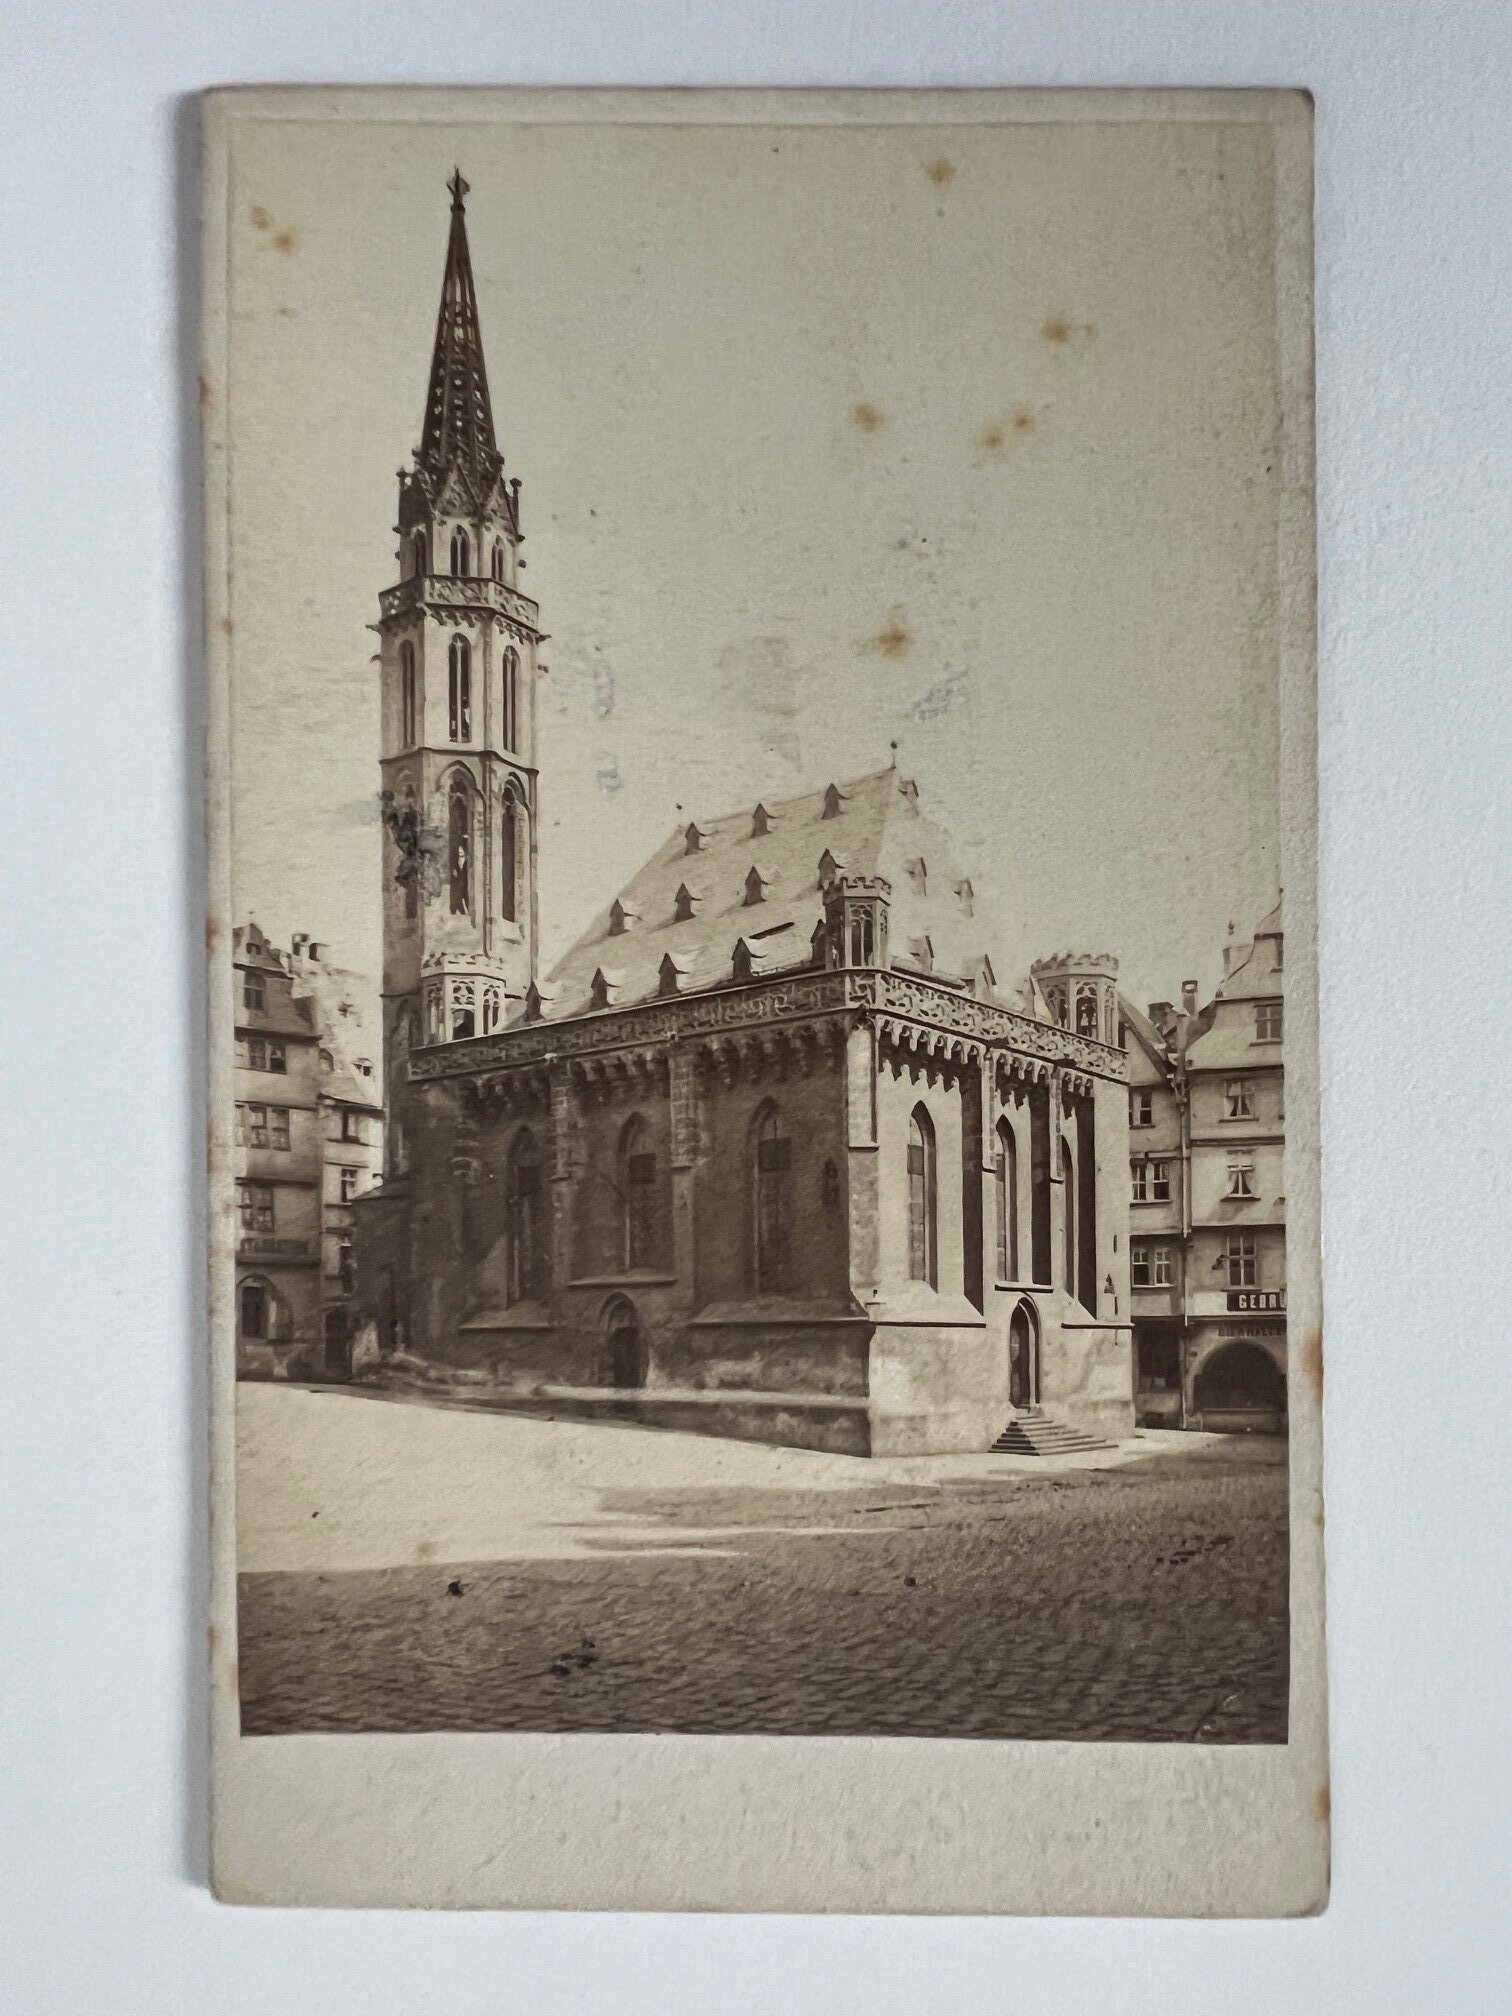 CdV, Theodor Creifelds, Frankfurt, Nr. 277, Nicolai-Kirche, ca. 1870. (Taunus-Rhein-Main - Regionalgeschichtliche Sammlung Dr. Stefan Naas CC BY-NC-SA)